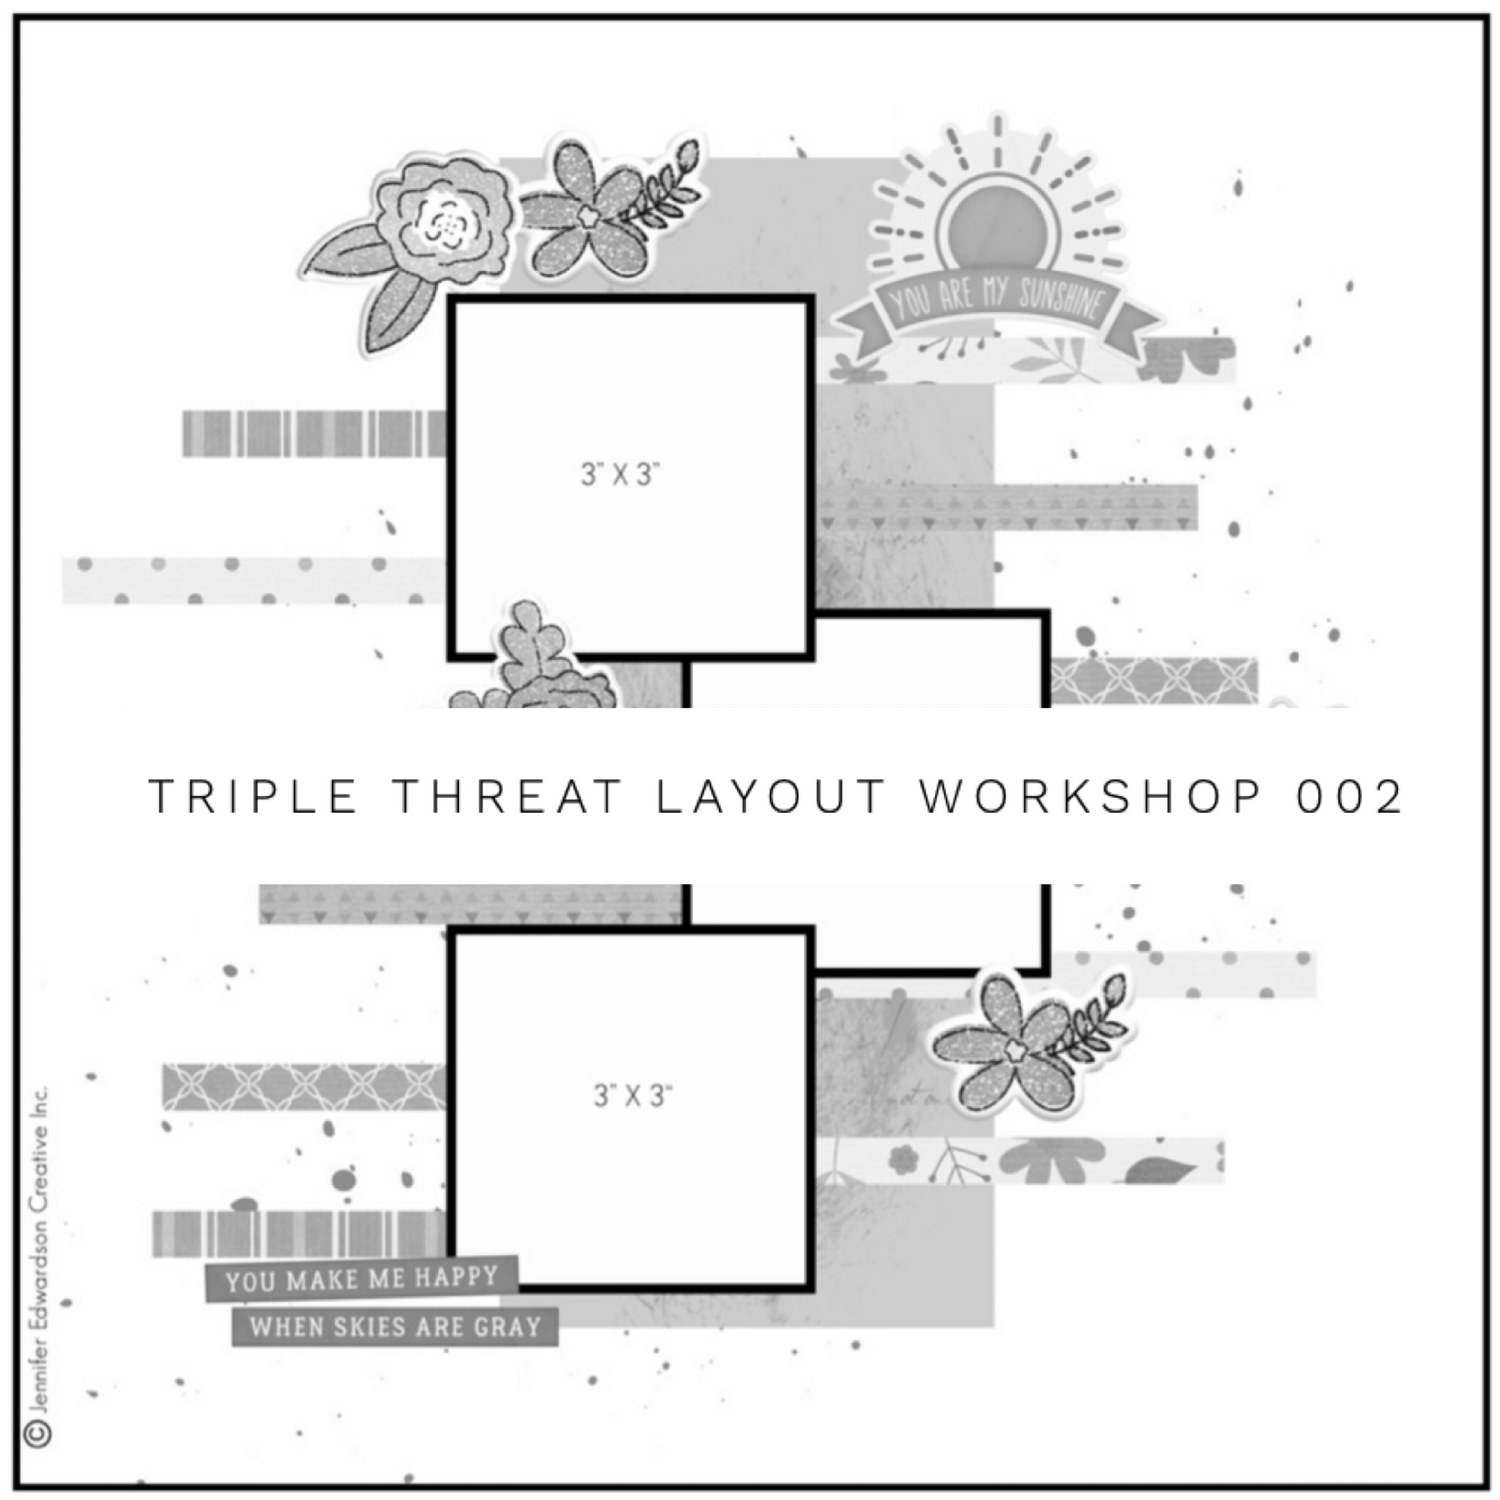 Triple Threat Layout Workshop 002